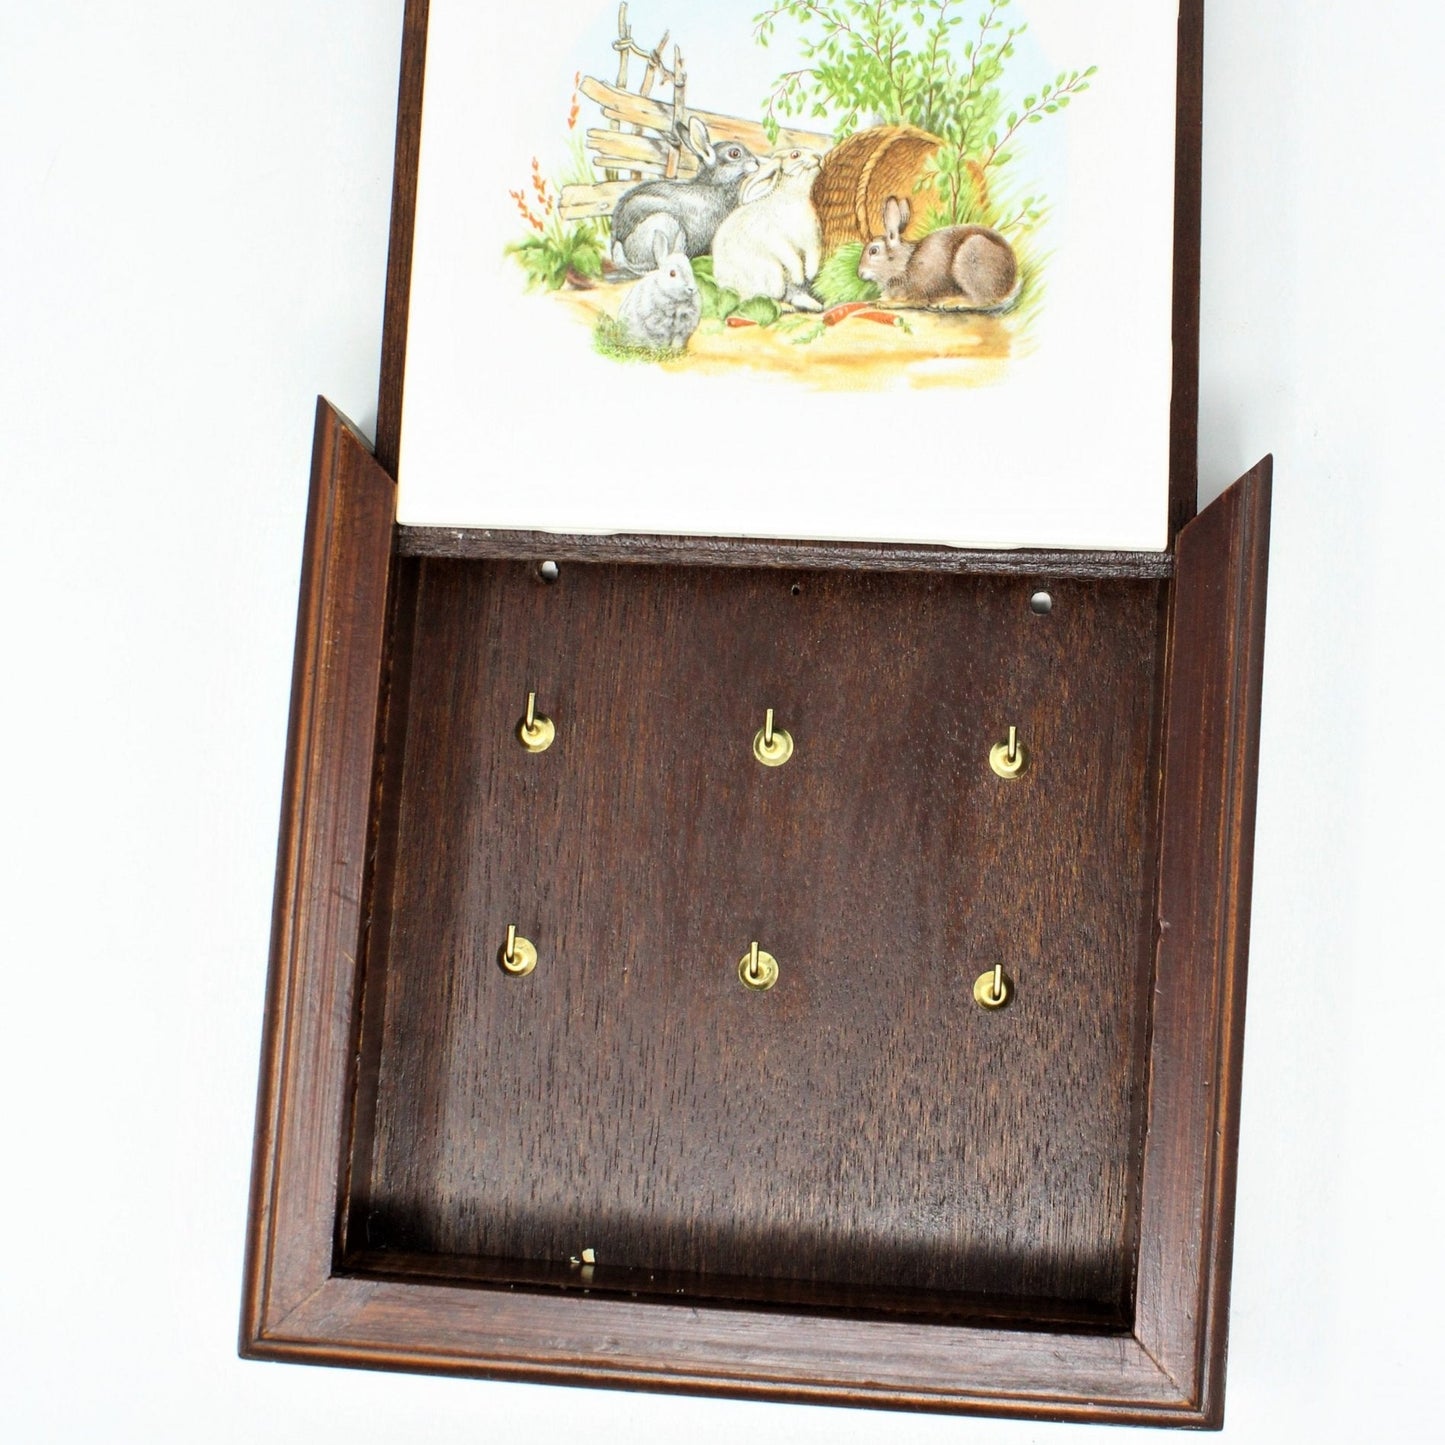 Key Holder Cabinet, Country Bunnies Tile, Wood, Vintage